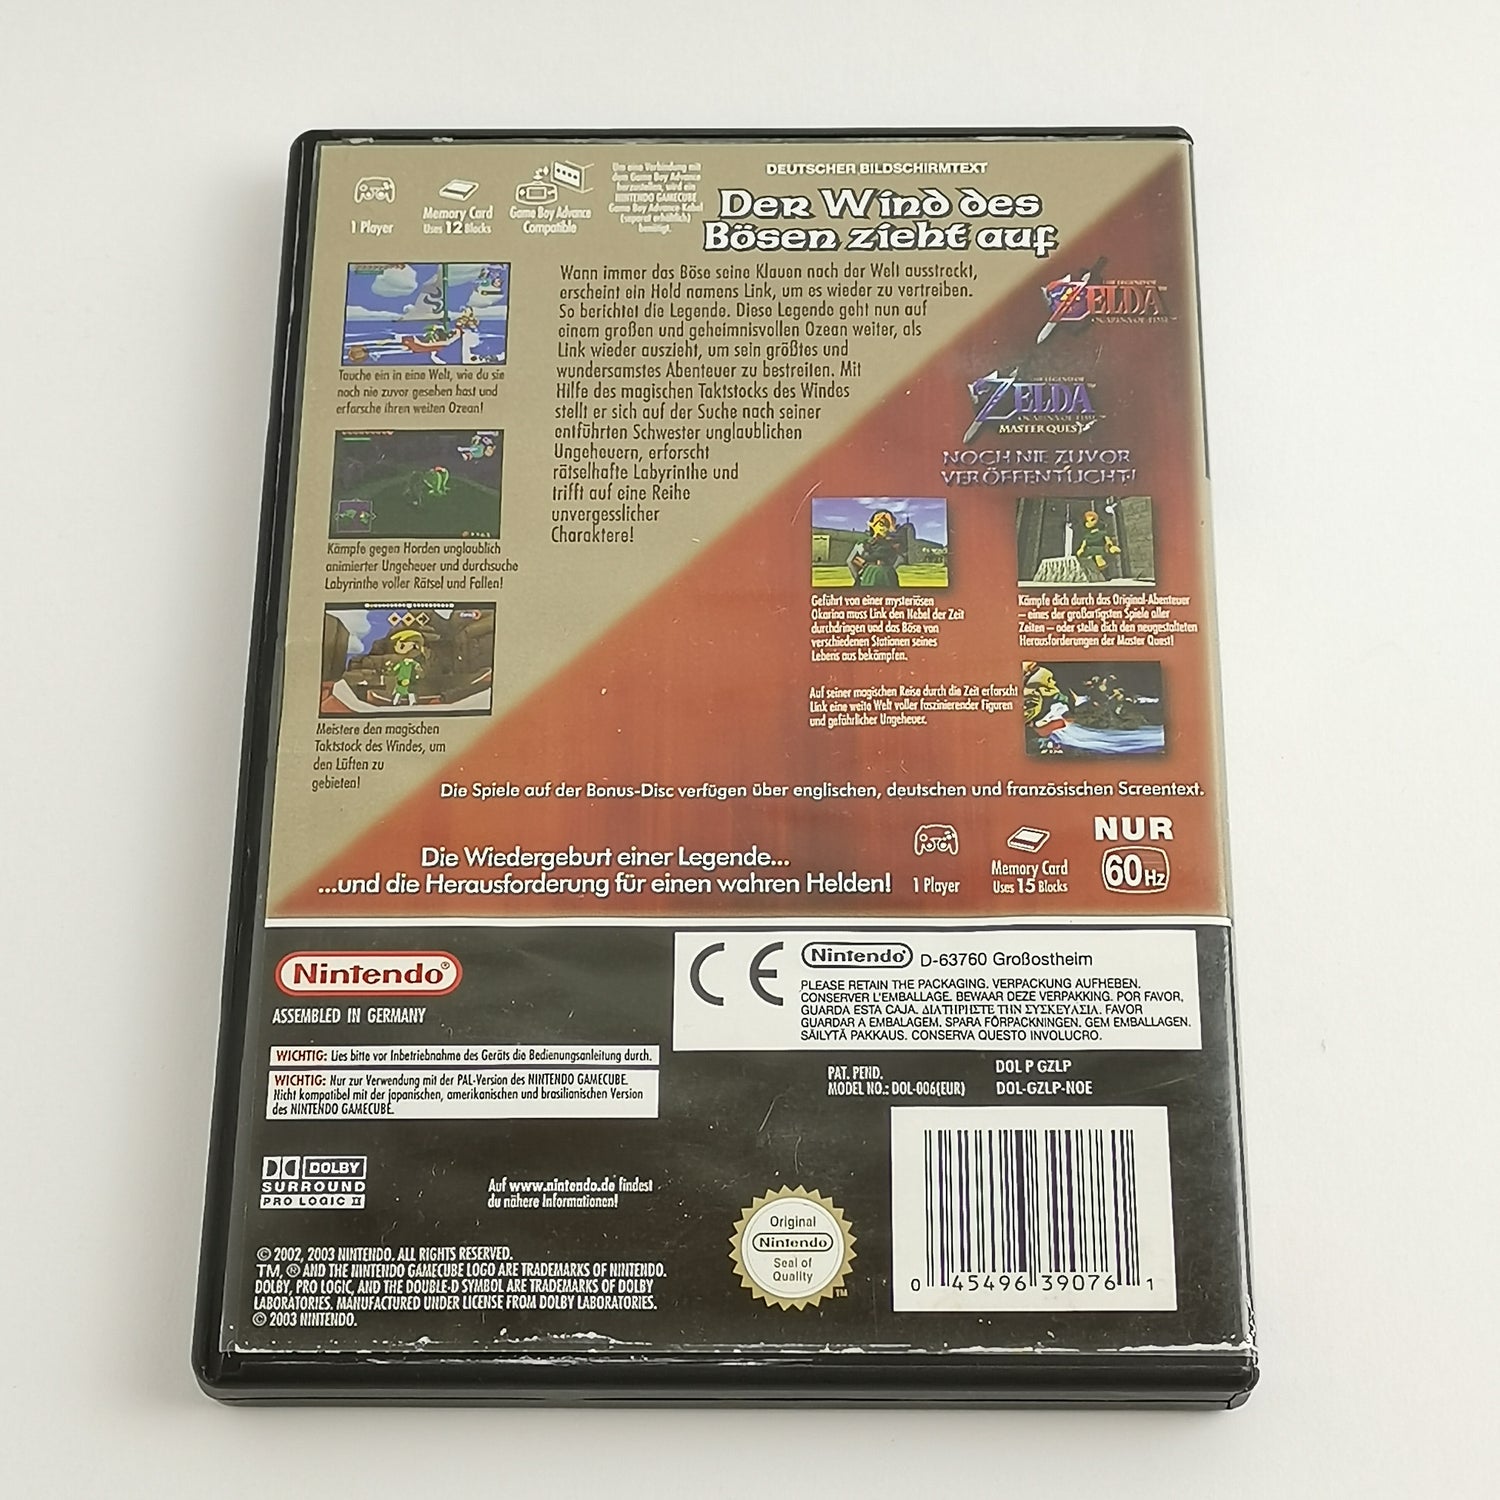 Nintendo Gamecube Game: Zelda The Windwaker Limited Edition - Original Packaging Instructions